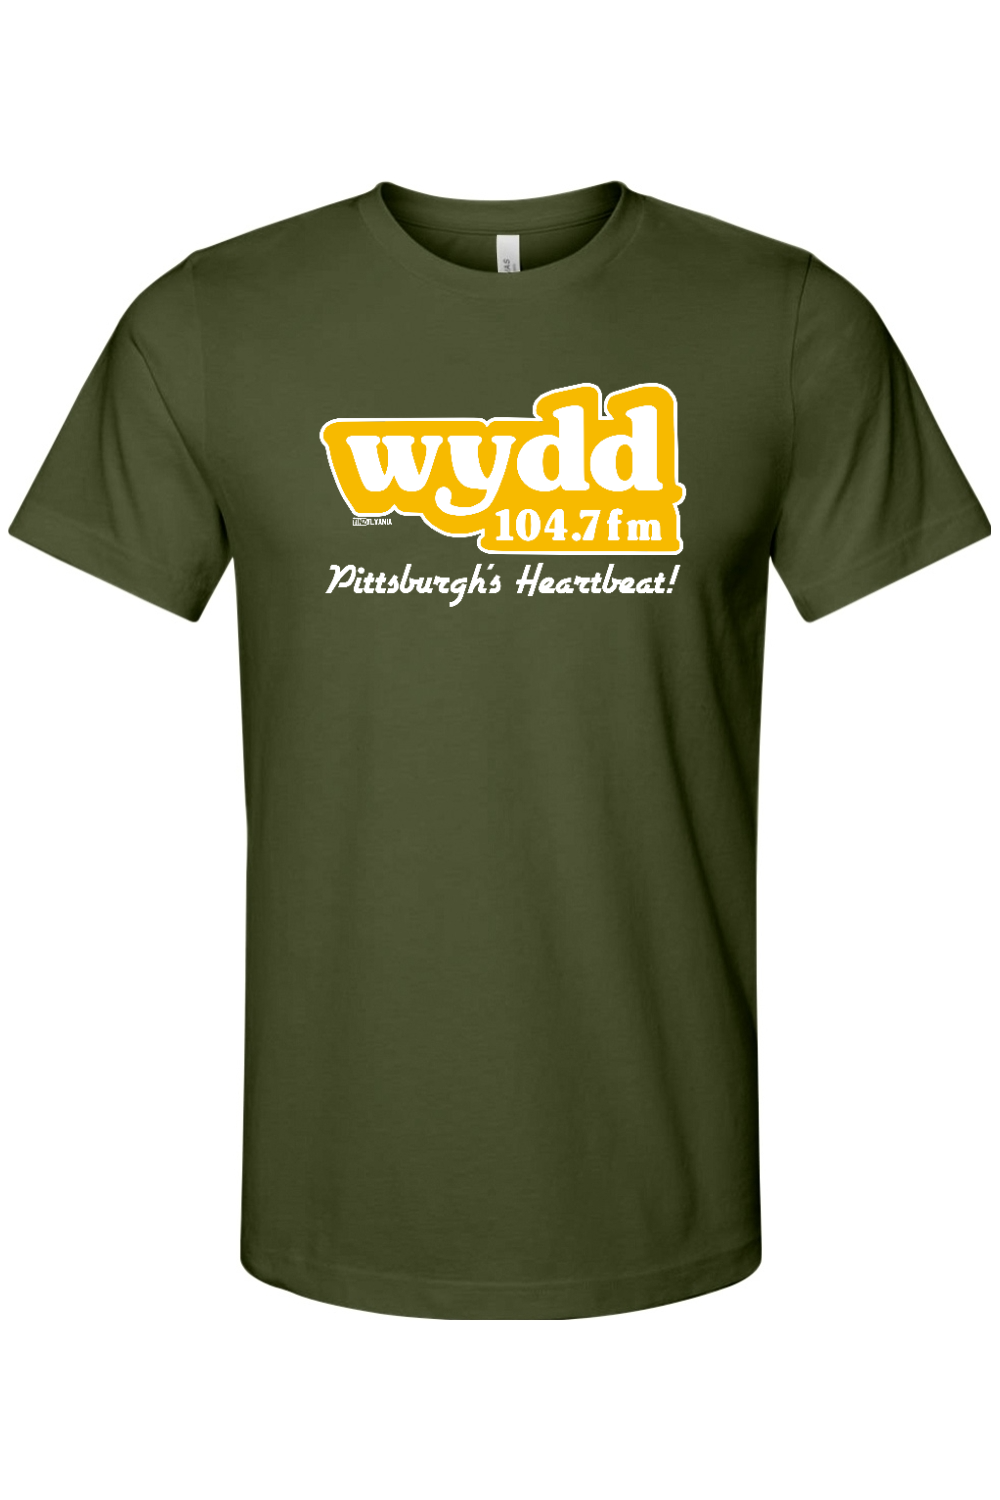 WYDD - Pittsburgh's Heartbeat - Yinzylvania